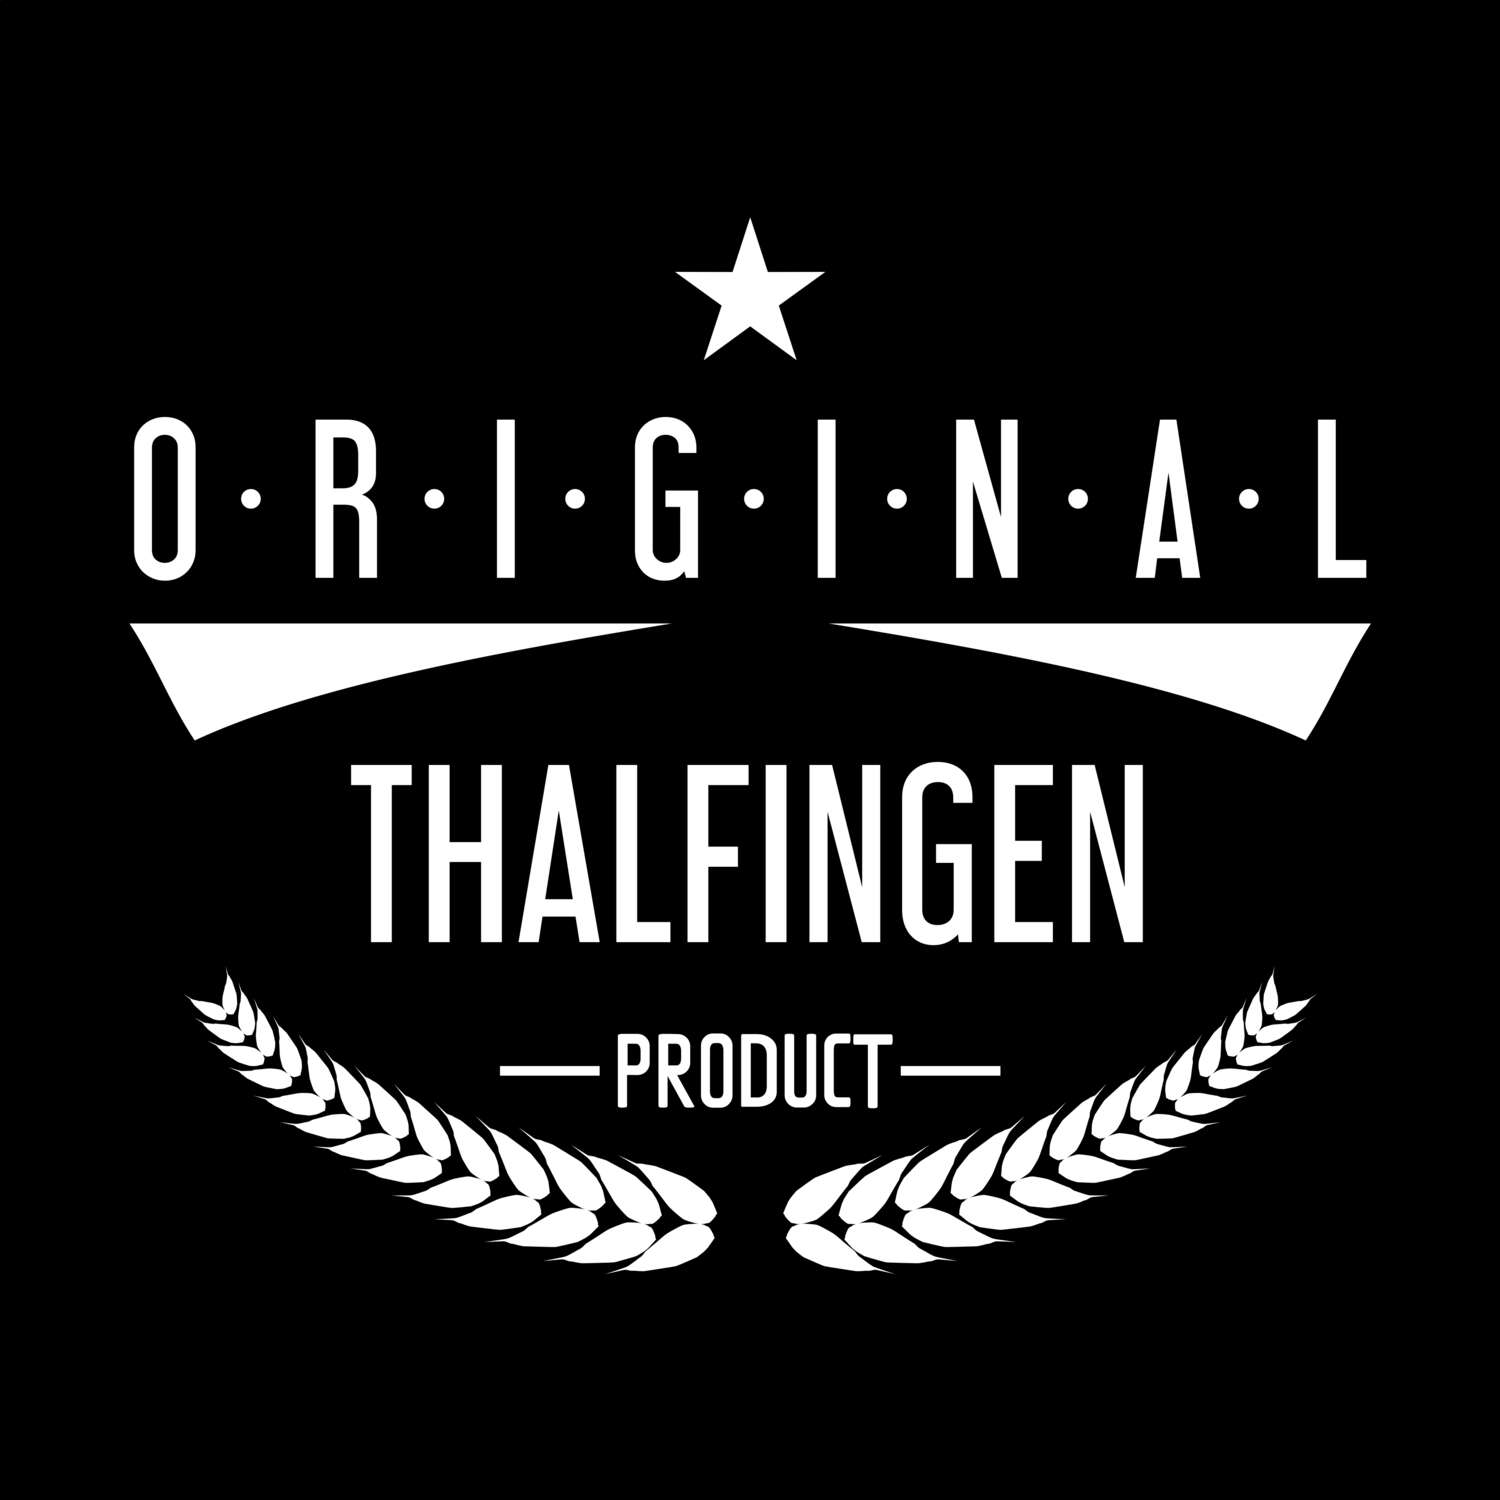 Thalfingen T-Shirt »Original Product«